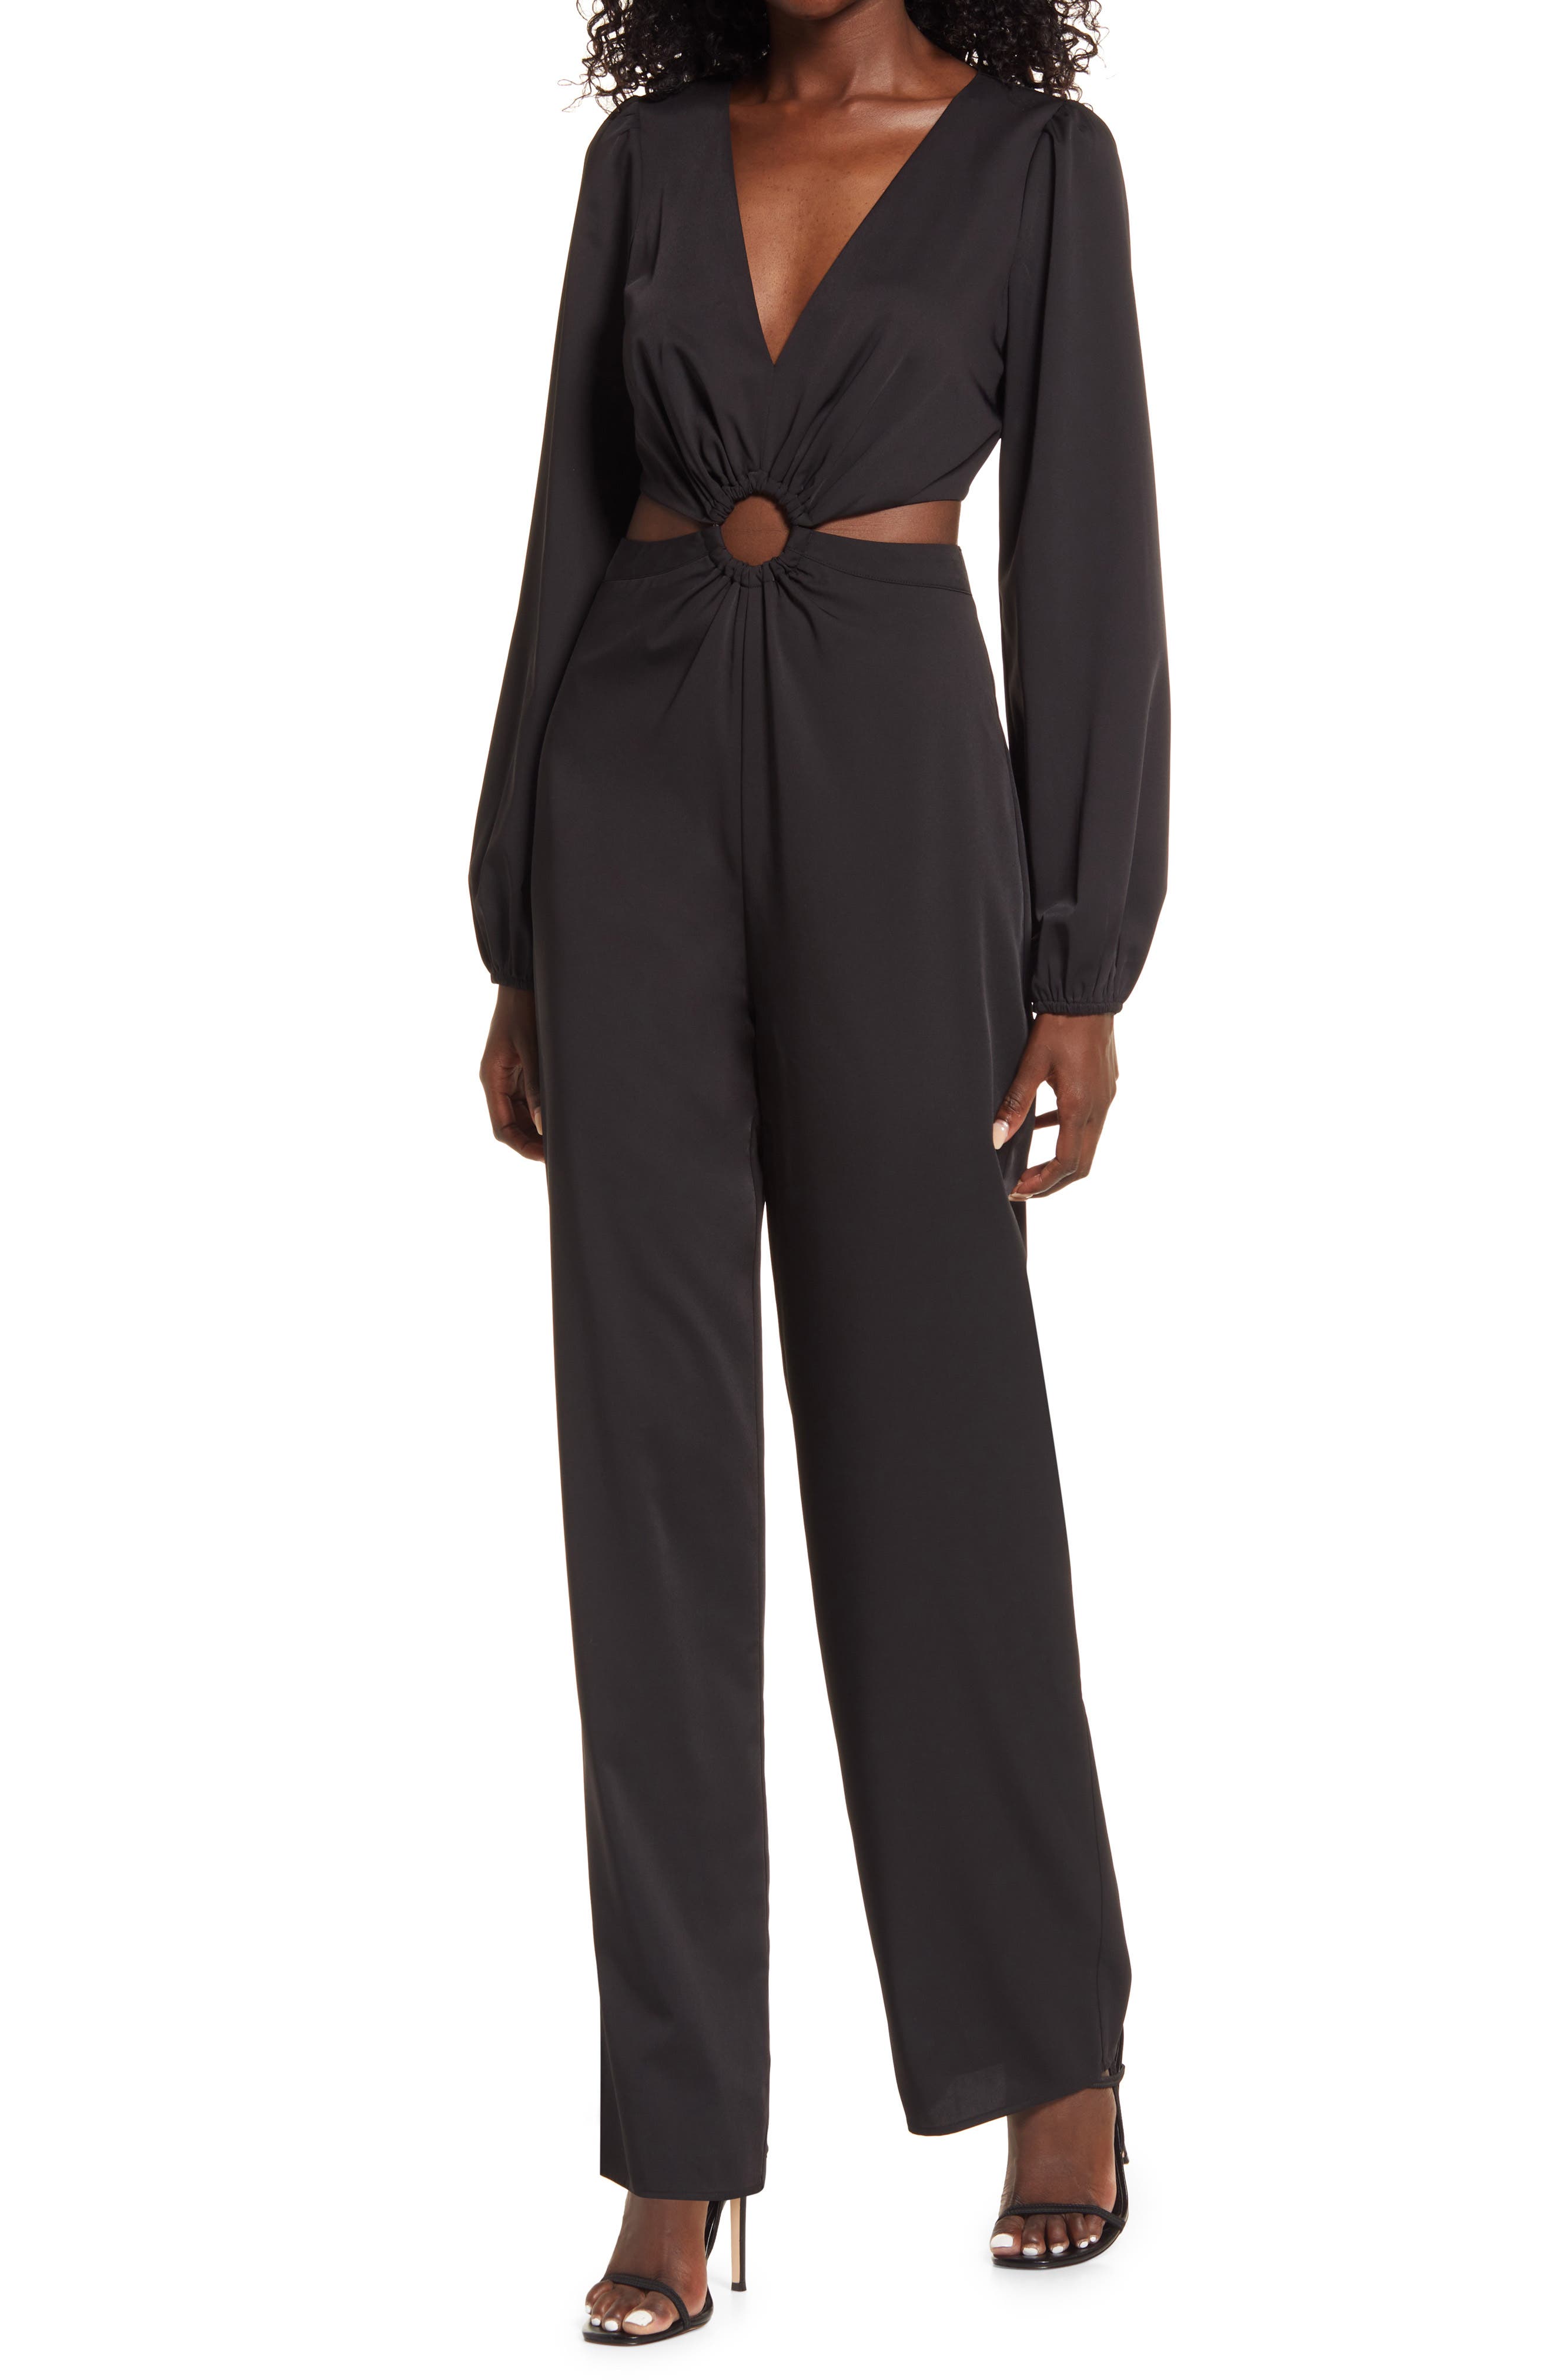 LISTHA Baggy Jumpsuits Plus Size Women V Neck Long Sleeve Romper Playsuit Pants 